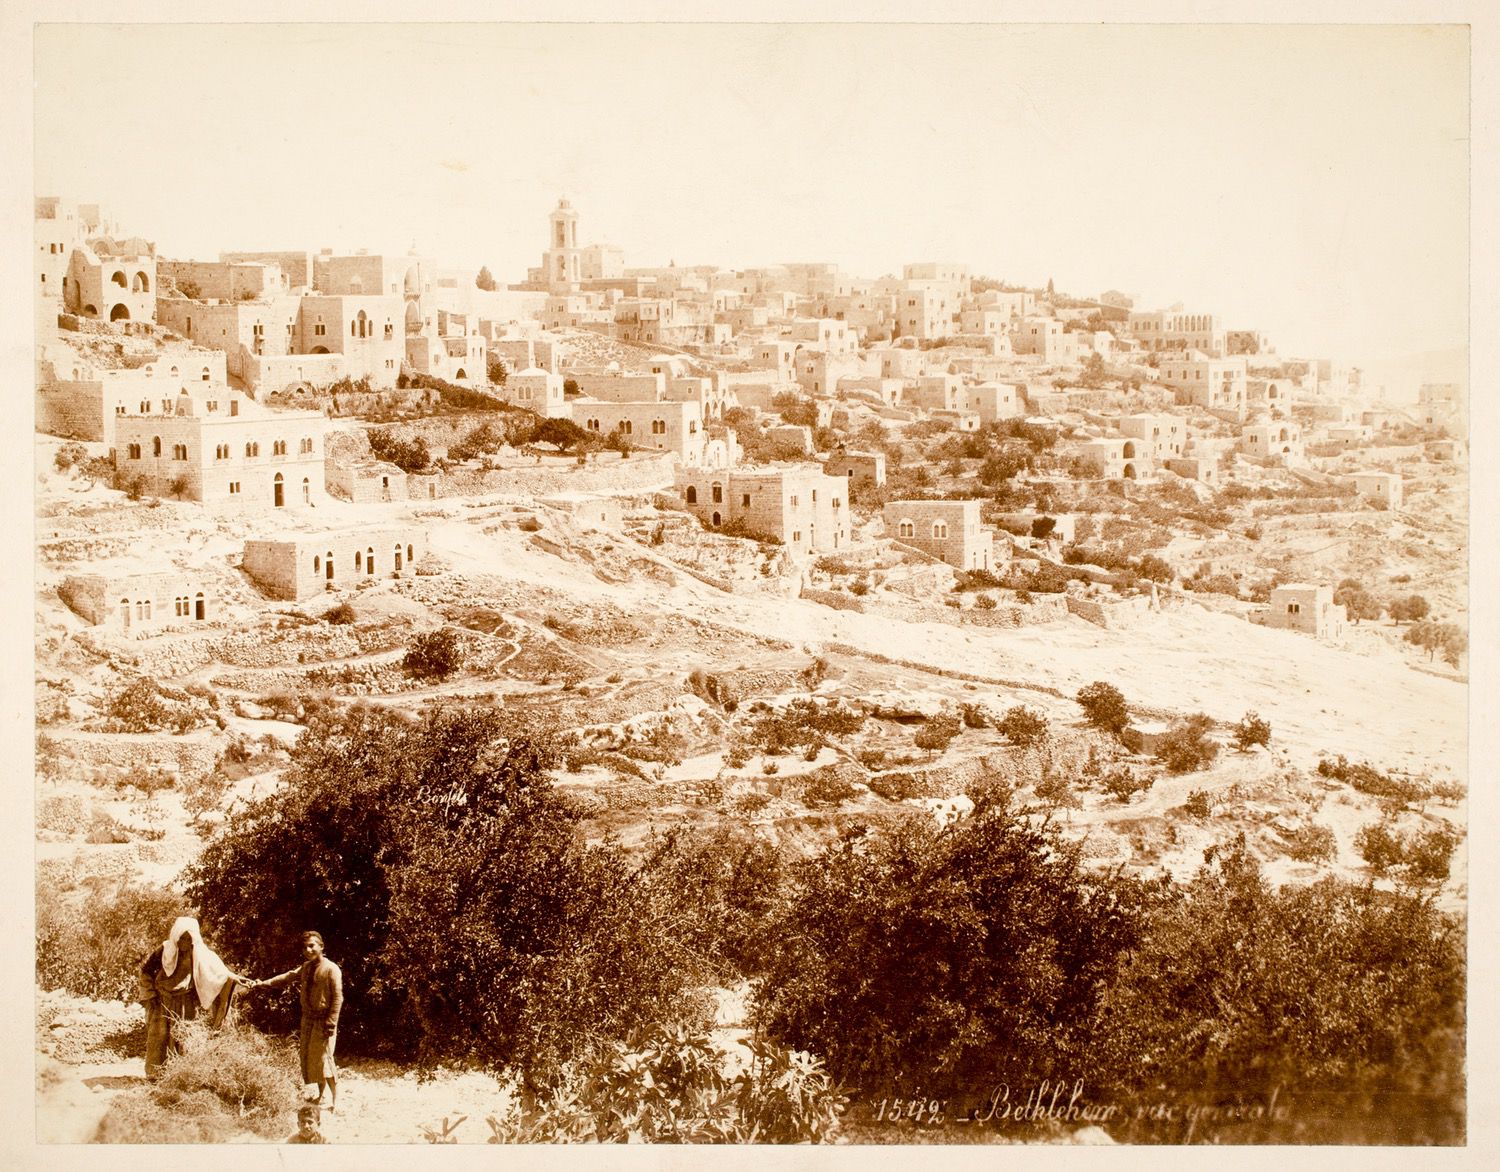  Bethlehem